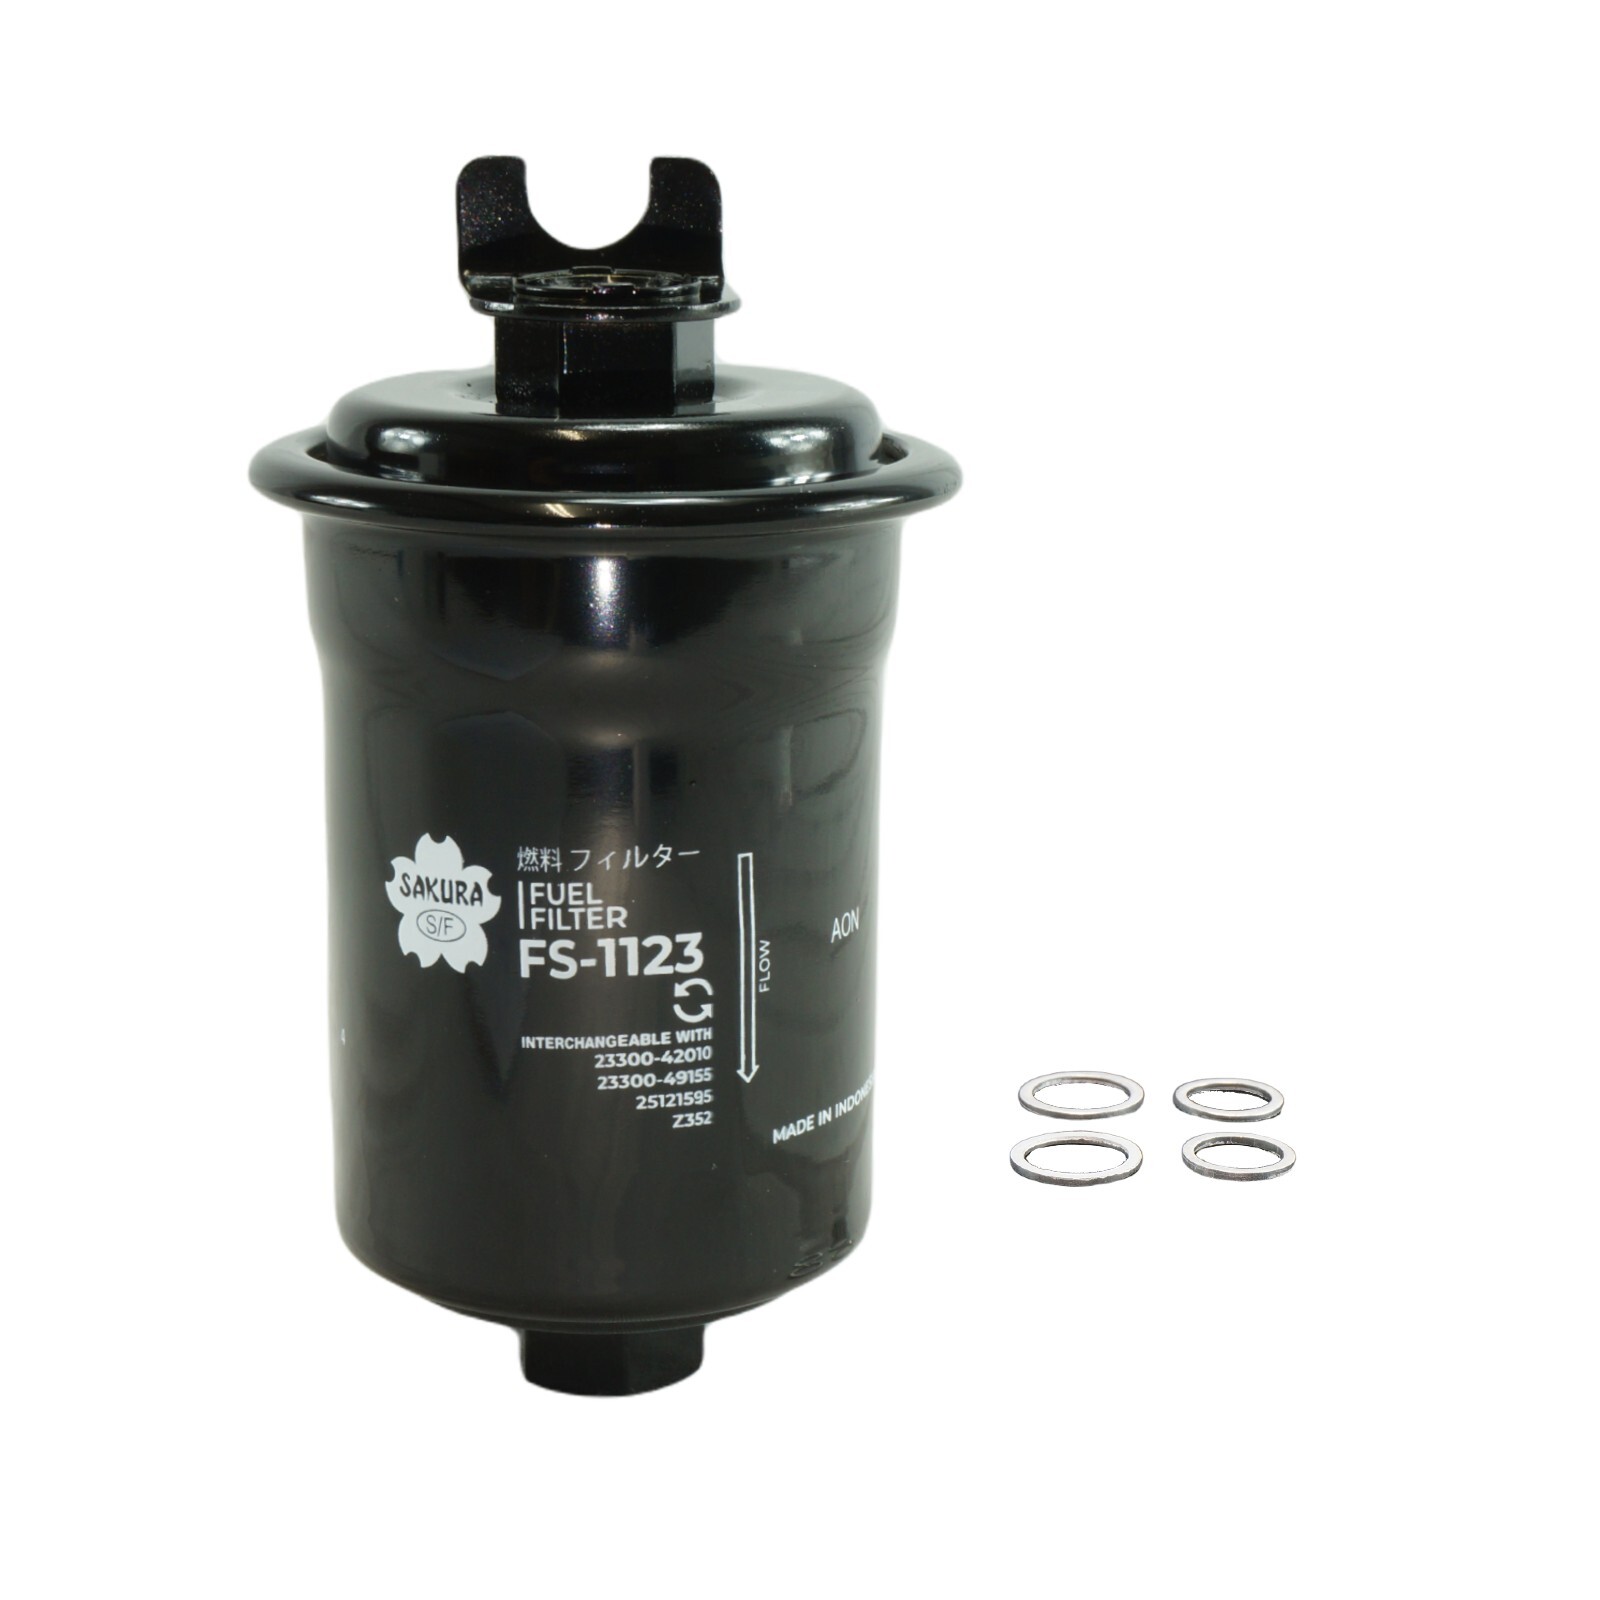 FS-1123 Sakura Fuel Filter - Fits Mitsubishi, Toytoa + More Xref: Z577, Z352, FF2087